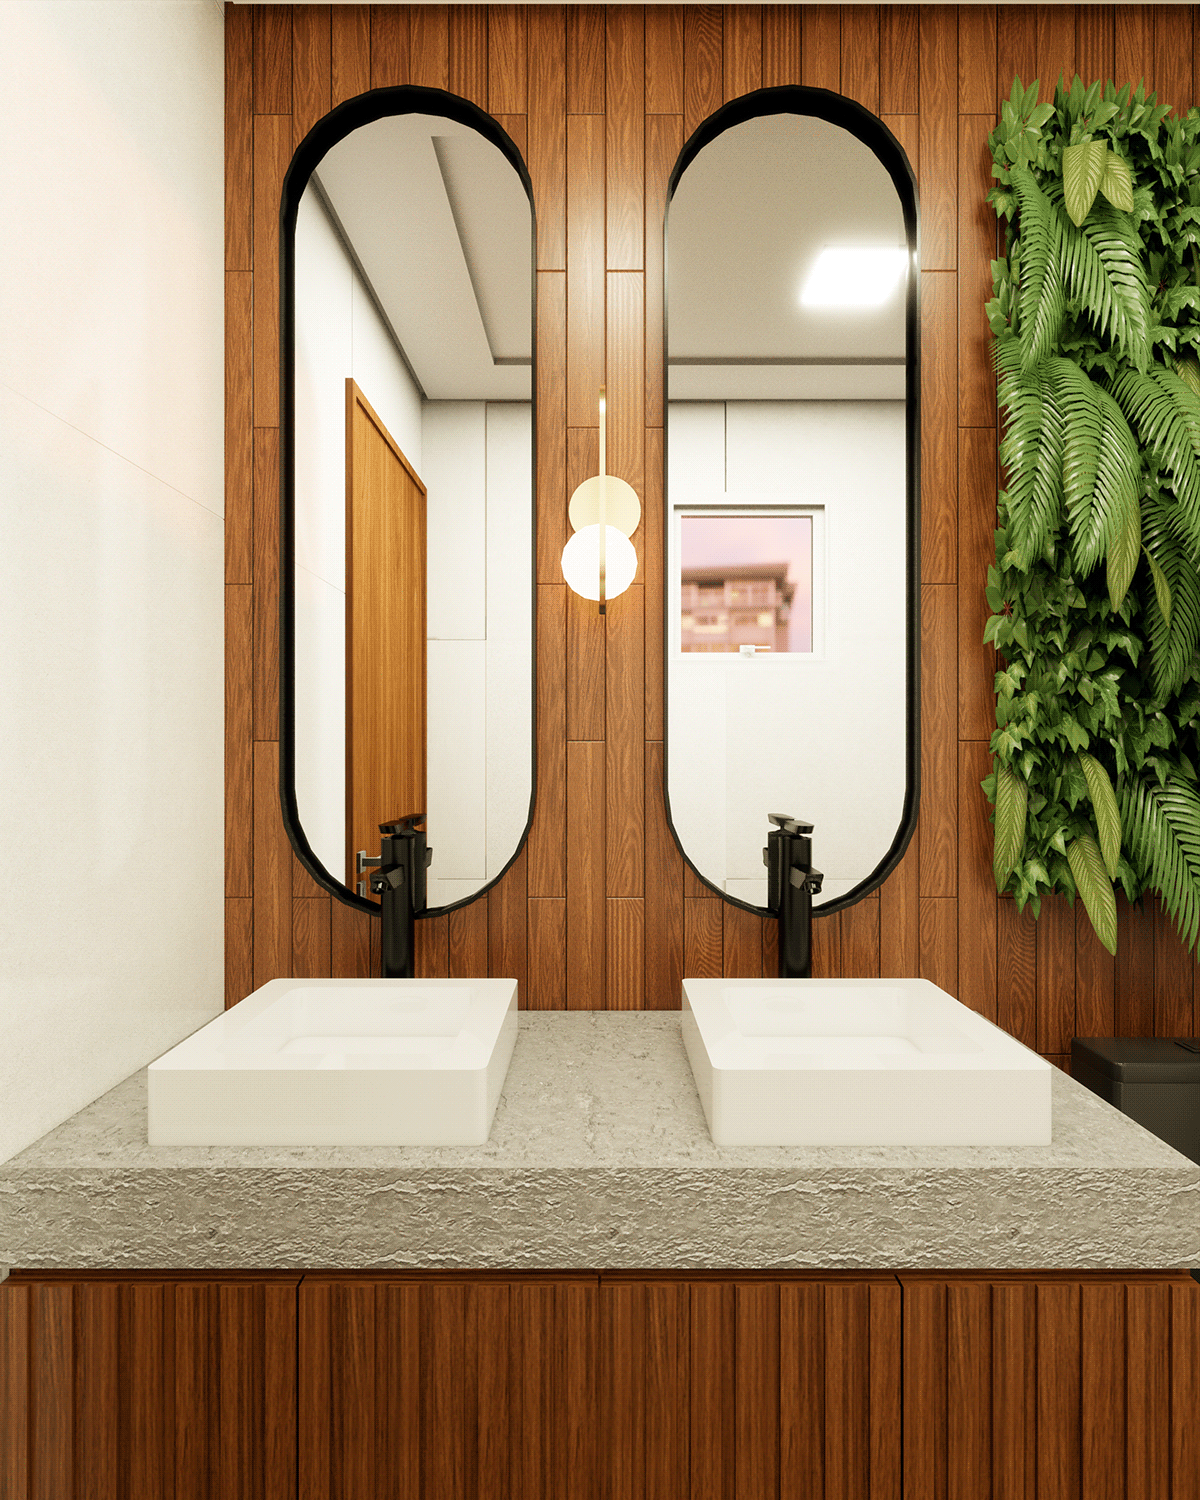 banheiro ARQUITETURA suite projeto de interiores Lavabo architecture interior design  Render banheiro casal Spa